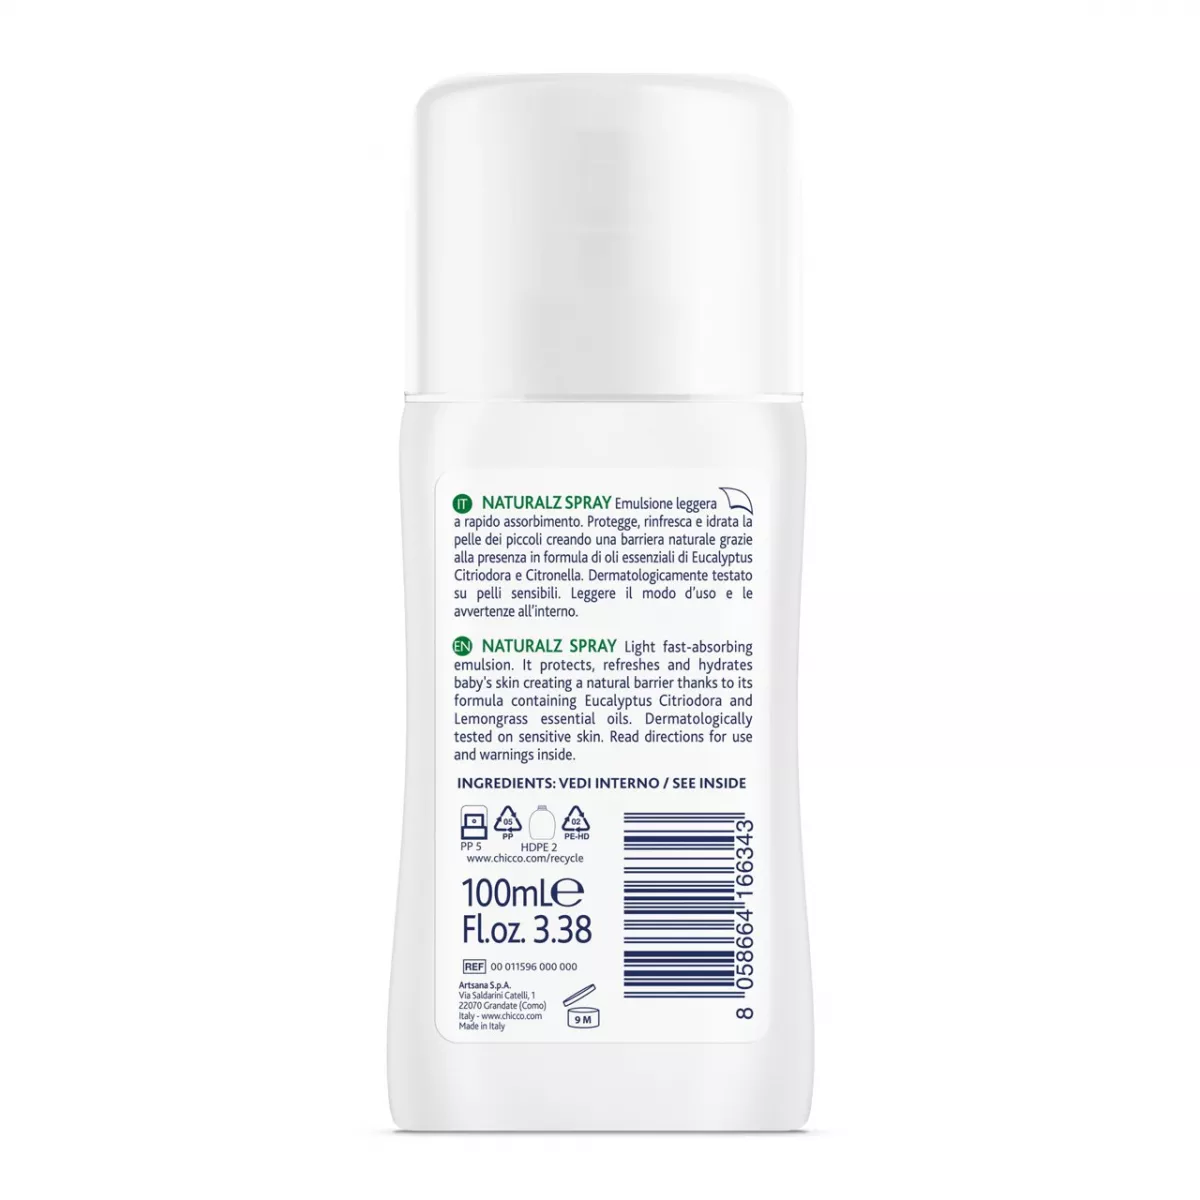 Spray protectie naturala Chicco NaturalZ, 100 ml, 2 luni+